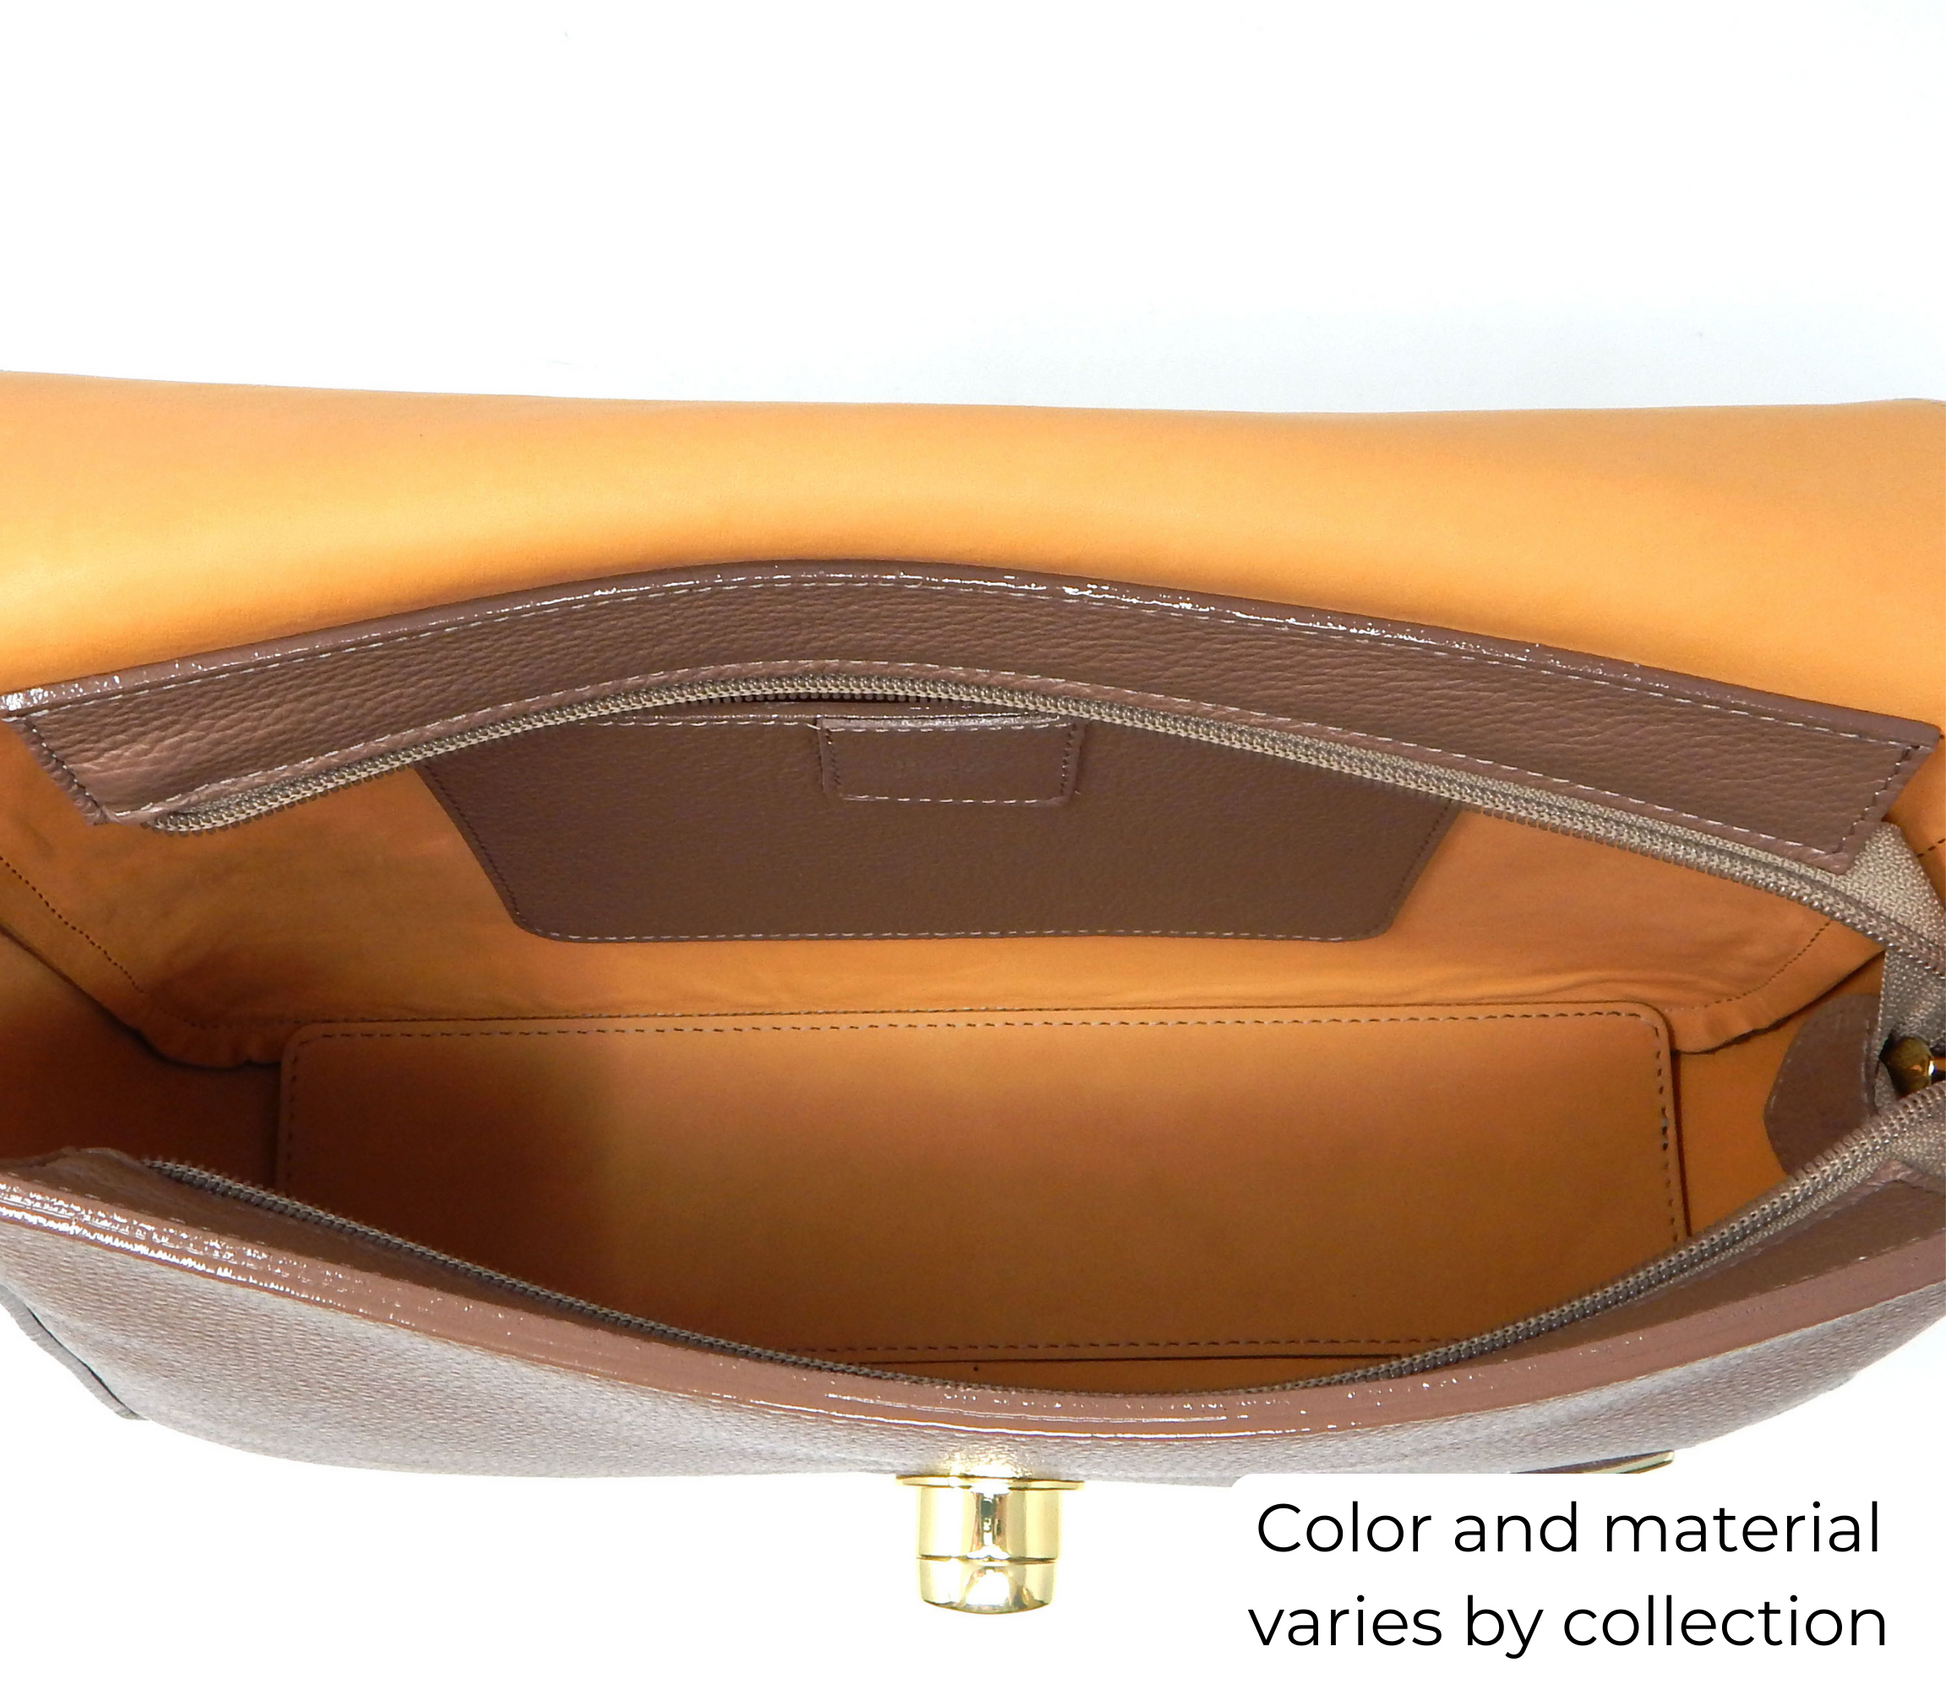 #color_ Beige White | Cavalinho Gallop Patent Leather Handbag - Beige White - inside_0515_64845544-7ebf-48f4-afff-ec3b8e9e10eb